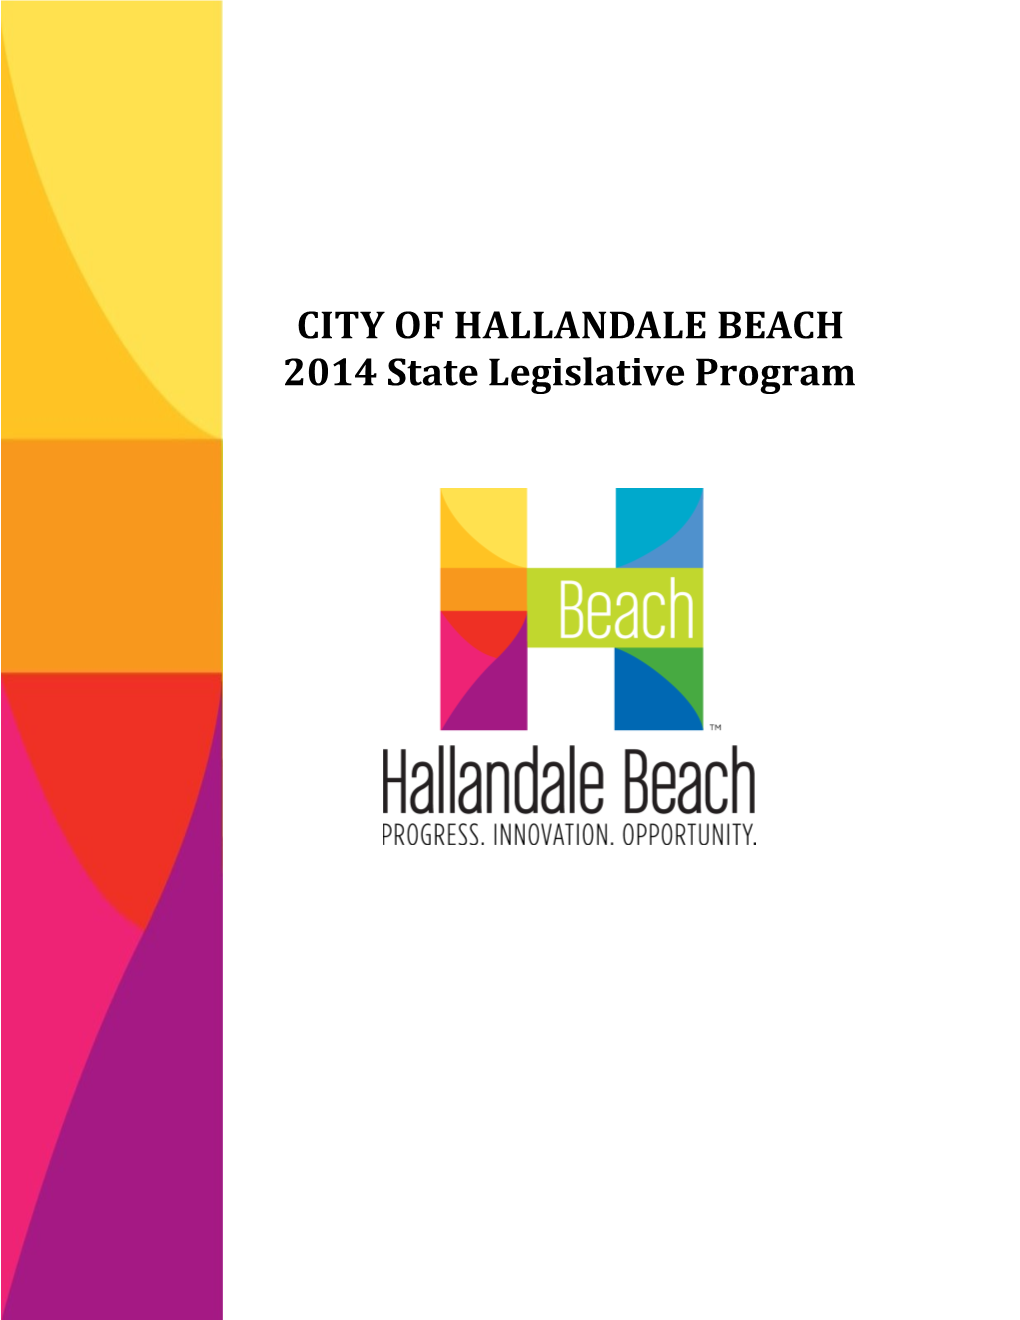 City of Hallandale Beach s2